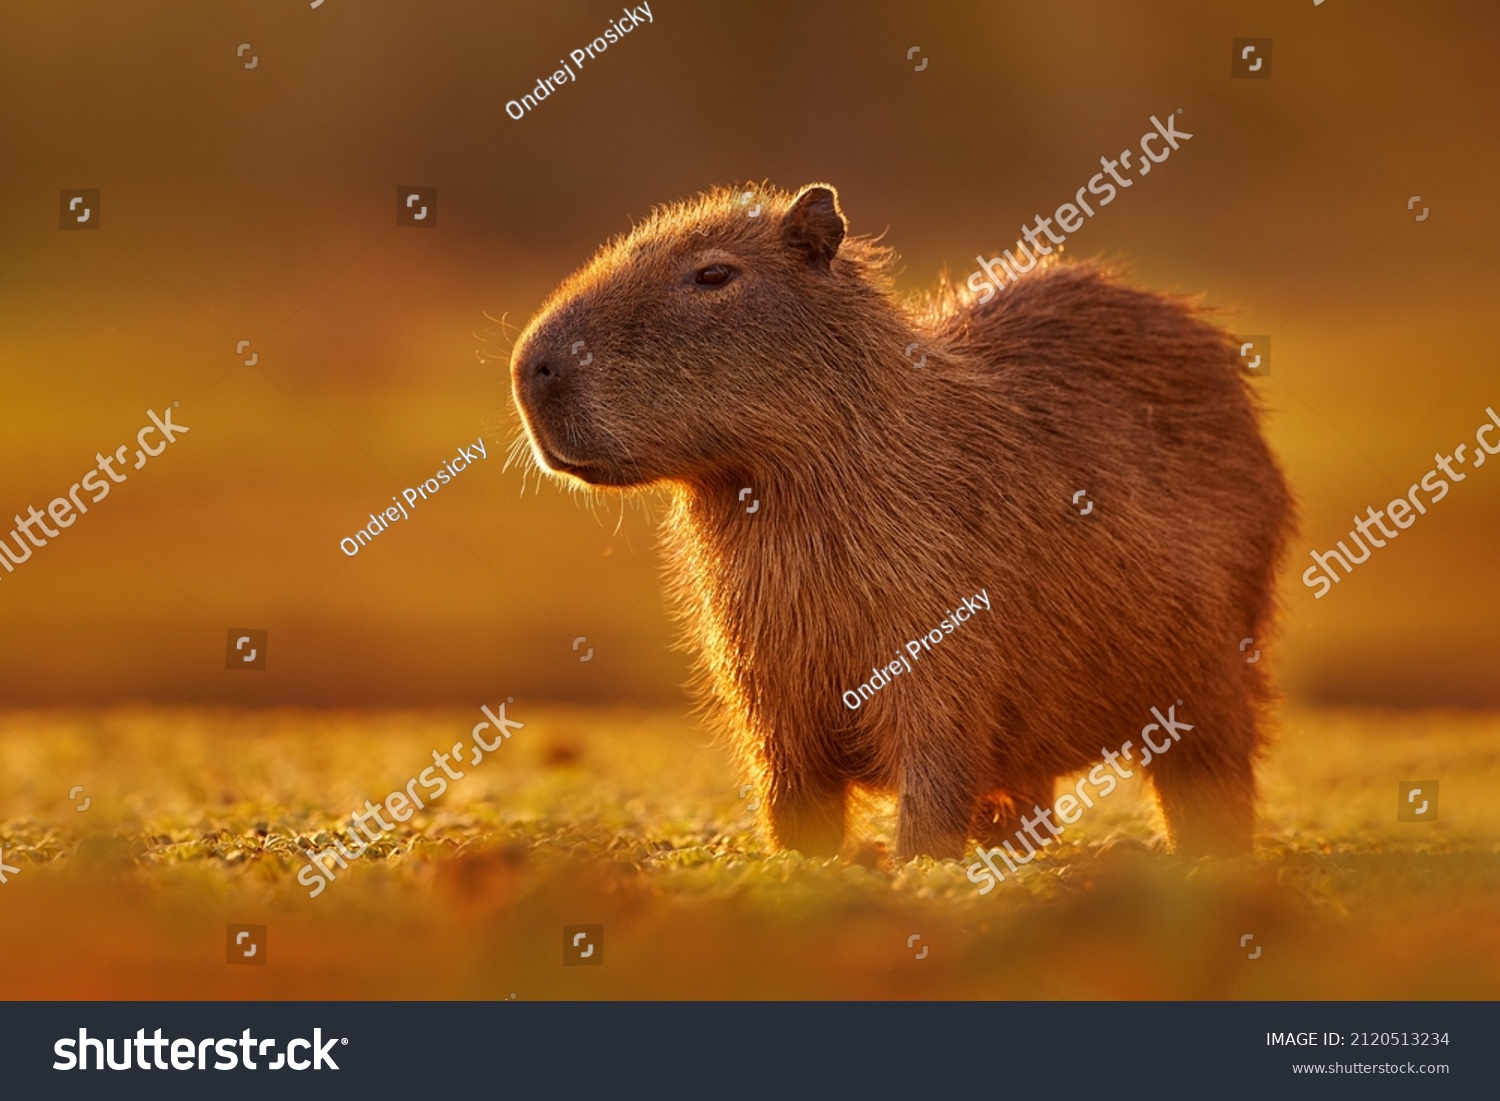 Brazil wildlife. Capybara, Hydrochoerus hydrochaeris, Biggest mouse near the water with evening light during sunset, Pantanal, Brazil. Wildlife scene from nature. Orange evening with cute mammal. #2120513234